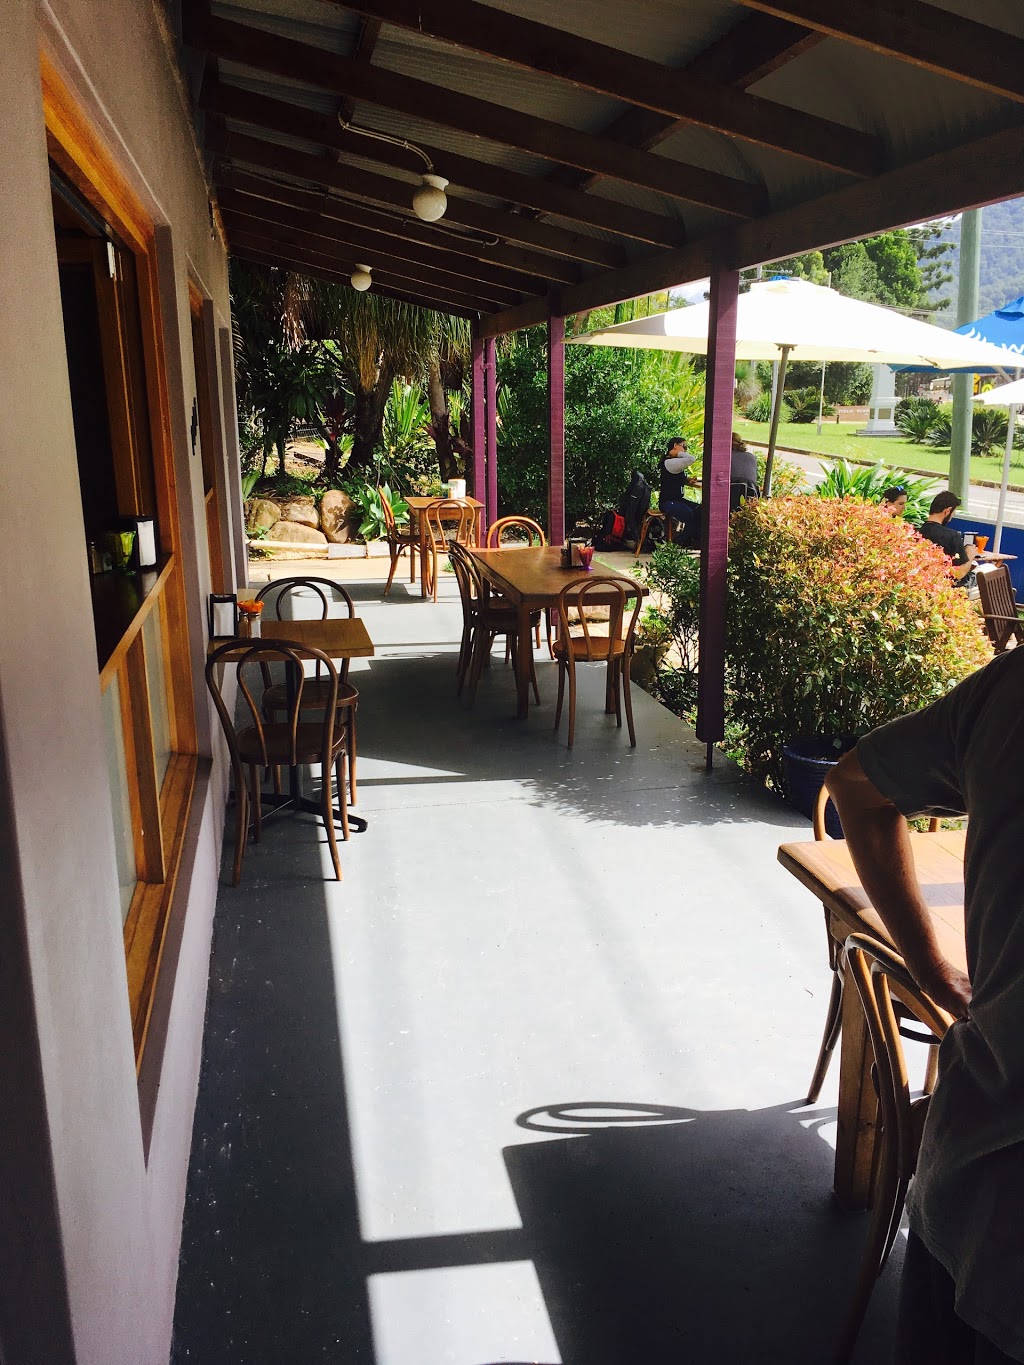 The Lounge Lizard Cafe | cafe | 1451 Kyogle Rd, Uki NSW 2484, Australia | 0266795036 OR +61 2 6679 5036